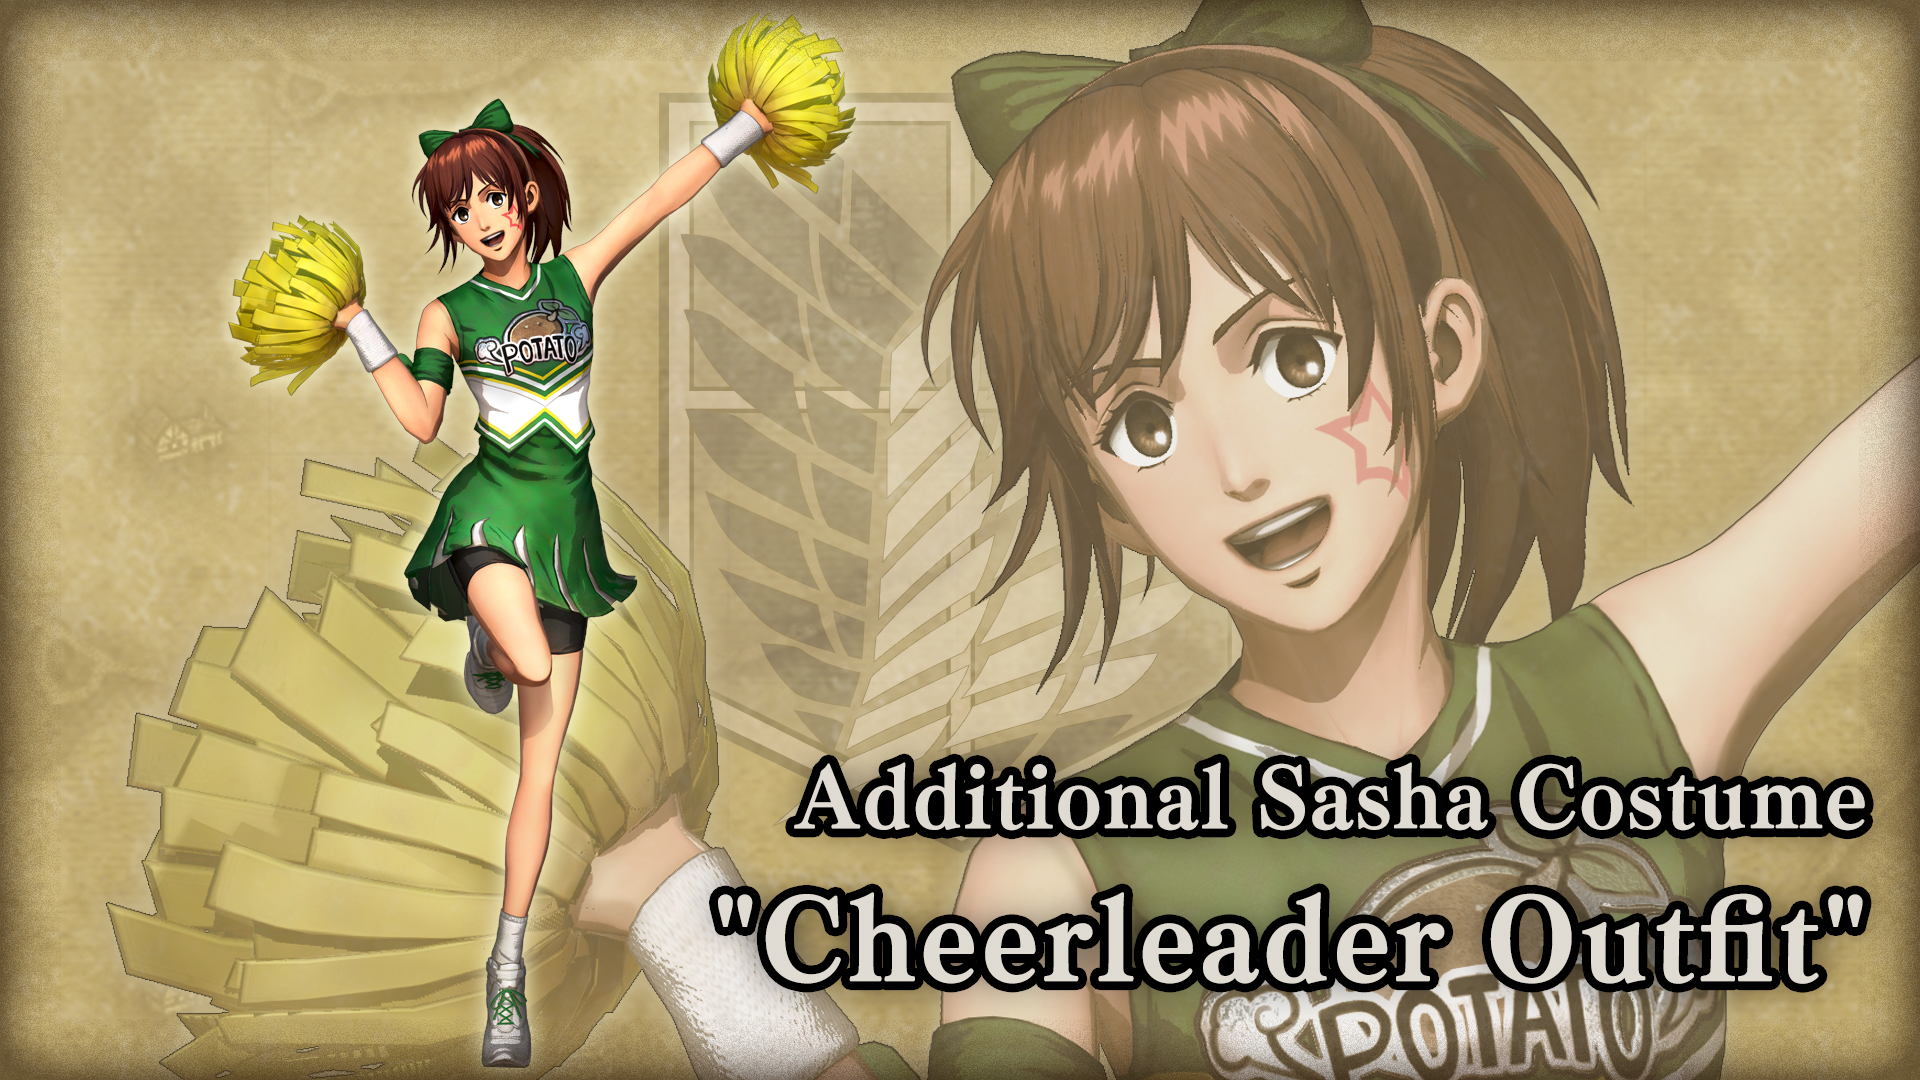 Additional Sasha Costume: "Cheerleader Outfit"